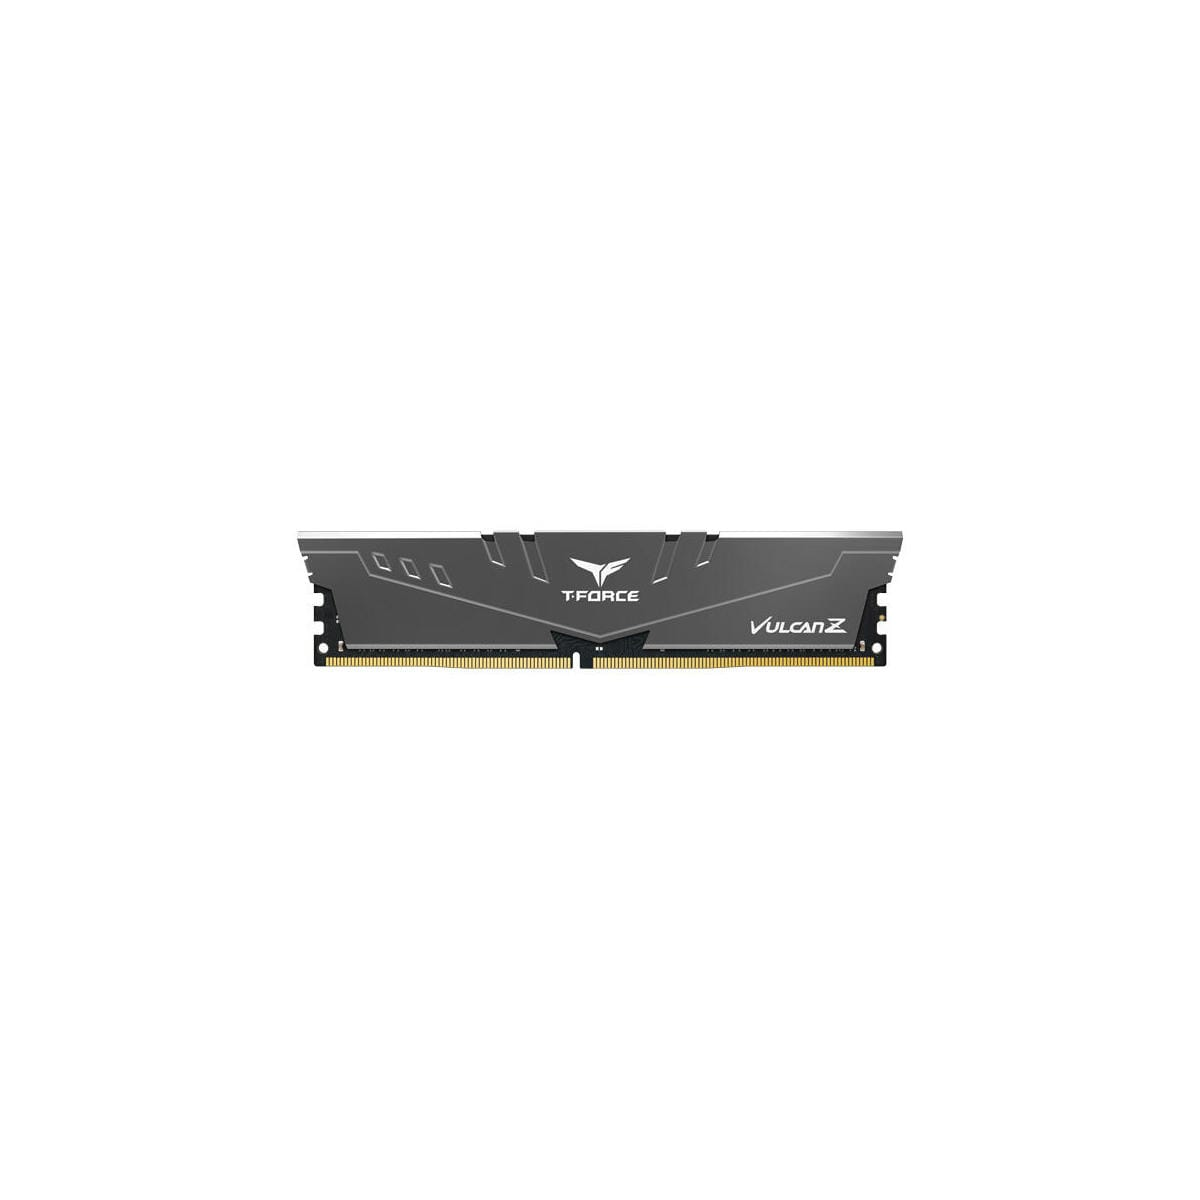 OTROS 2x8GB, 1.35V, Vulcan GB series, Speicher-Kit DDR4 Z 16 grey